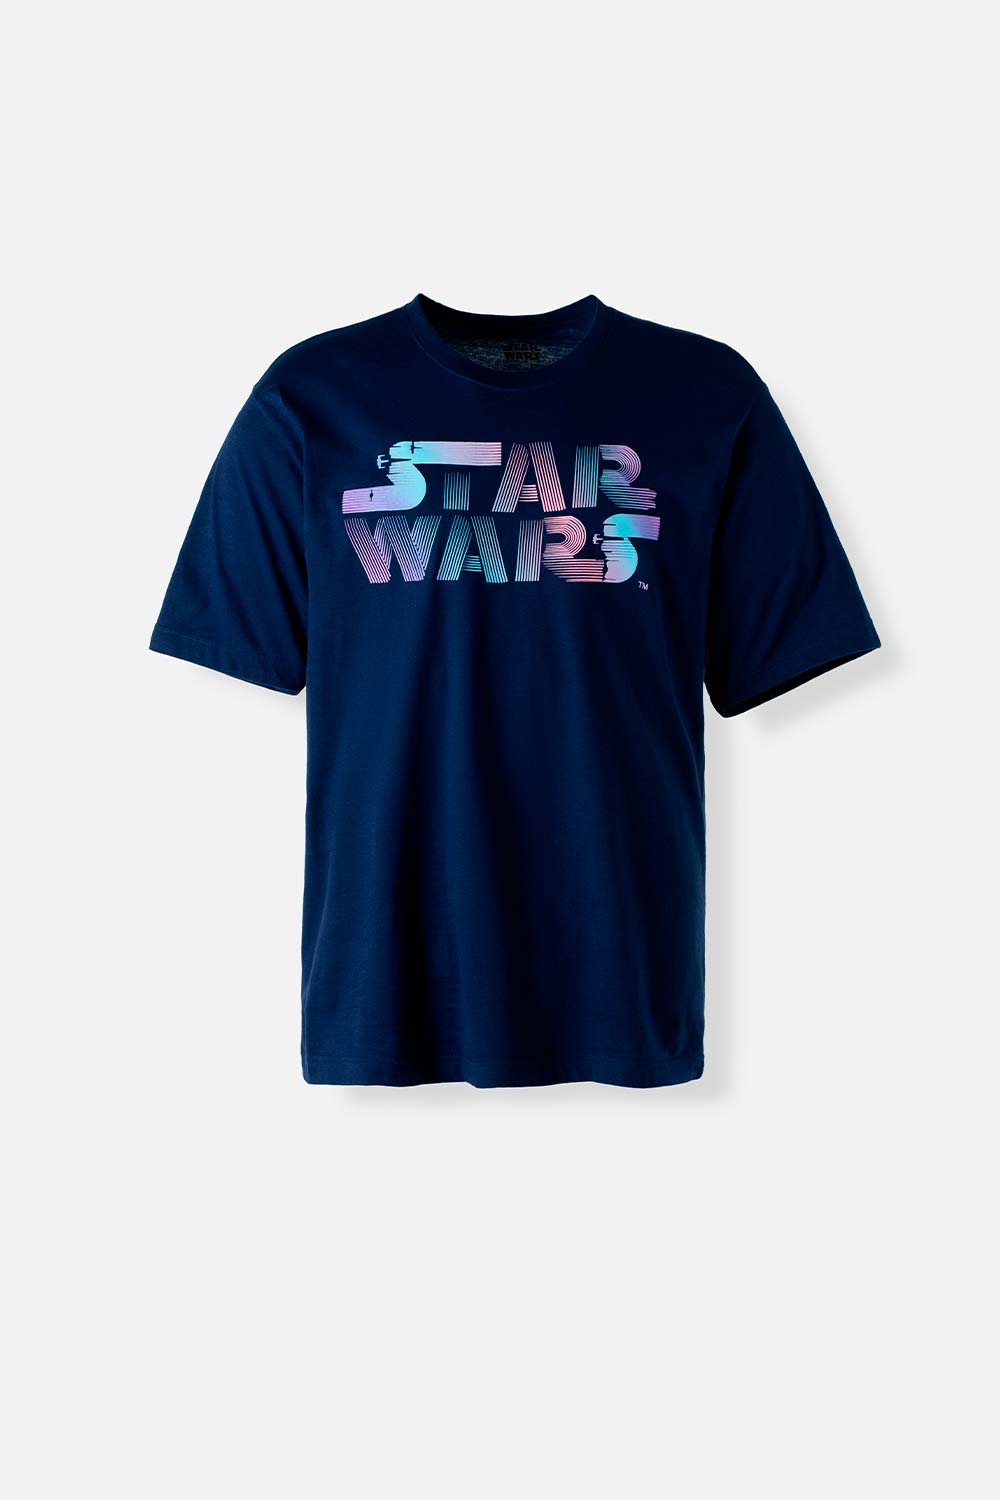 Camiseta de Star Wars azul manga corta para hombre XS-0